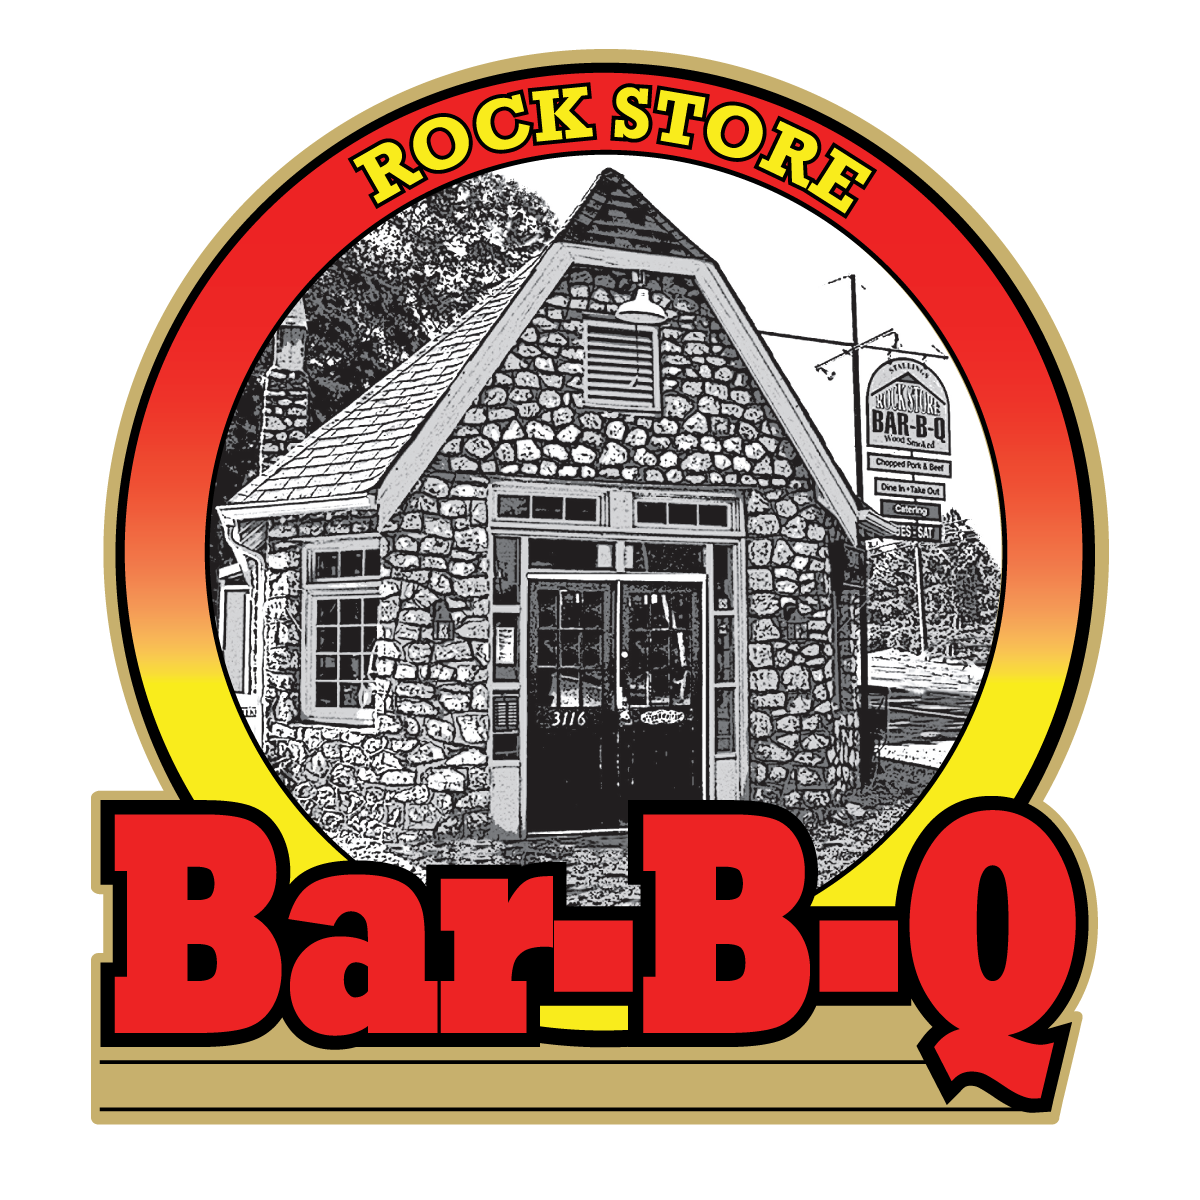 Waxhaw Rock Store BBQ